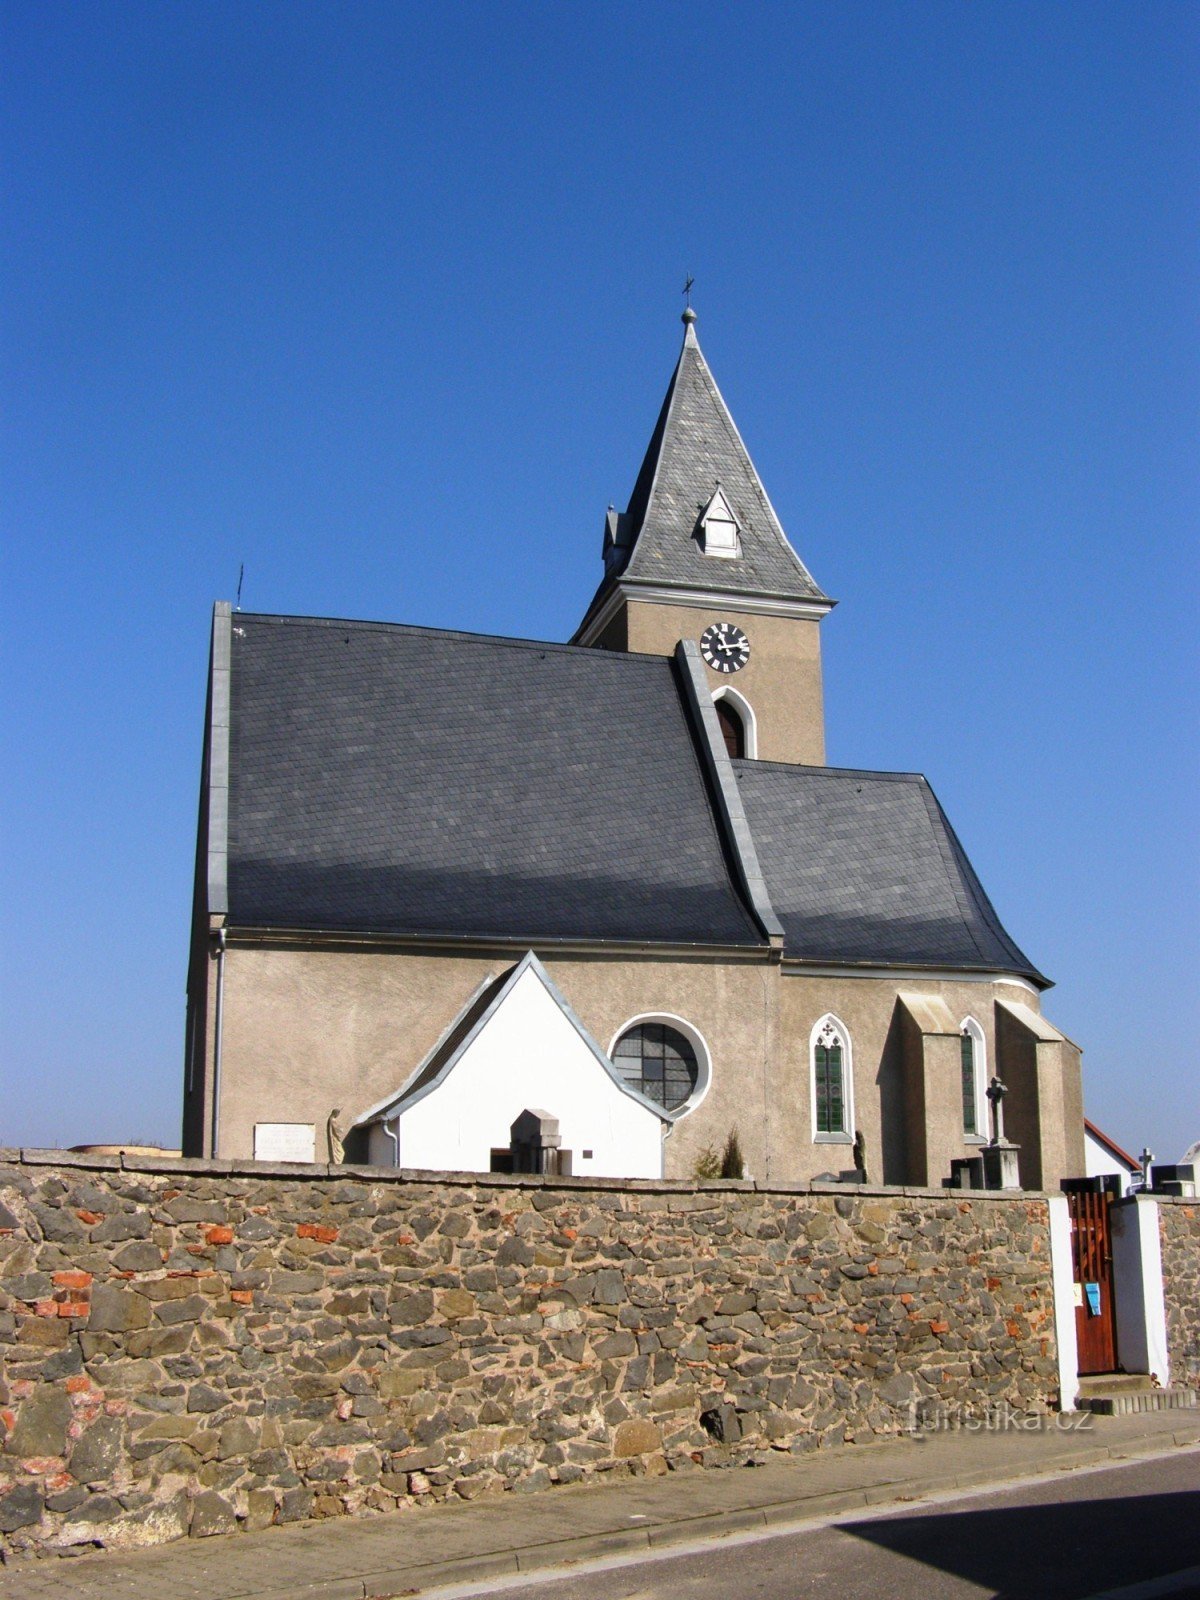 Dríteč - biserica Sf. Petru și Pavel